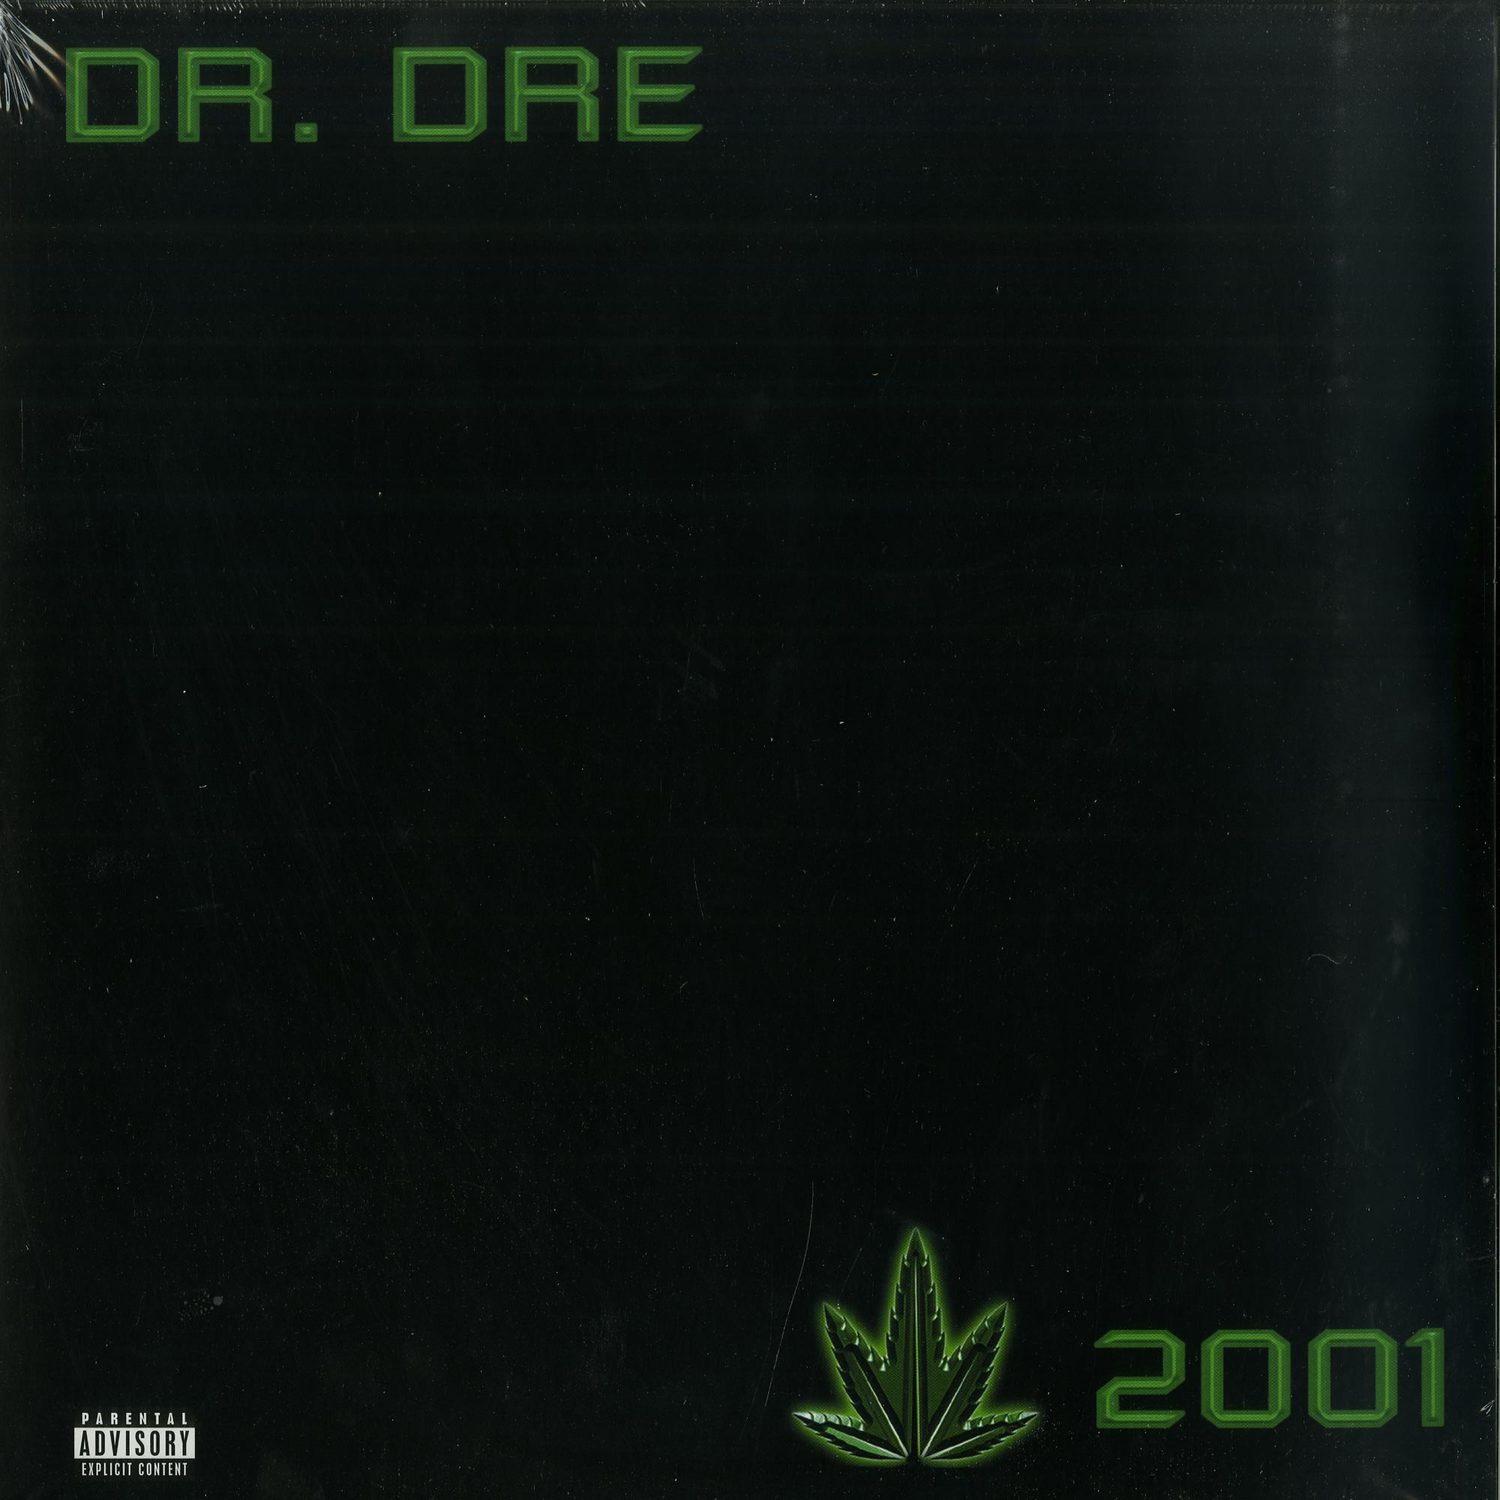 dr dre the chronic album cover 1500x1500